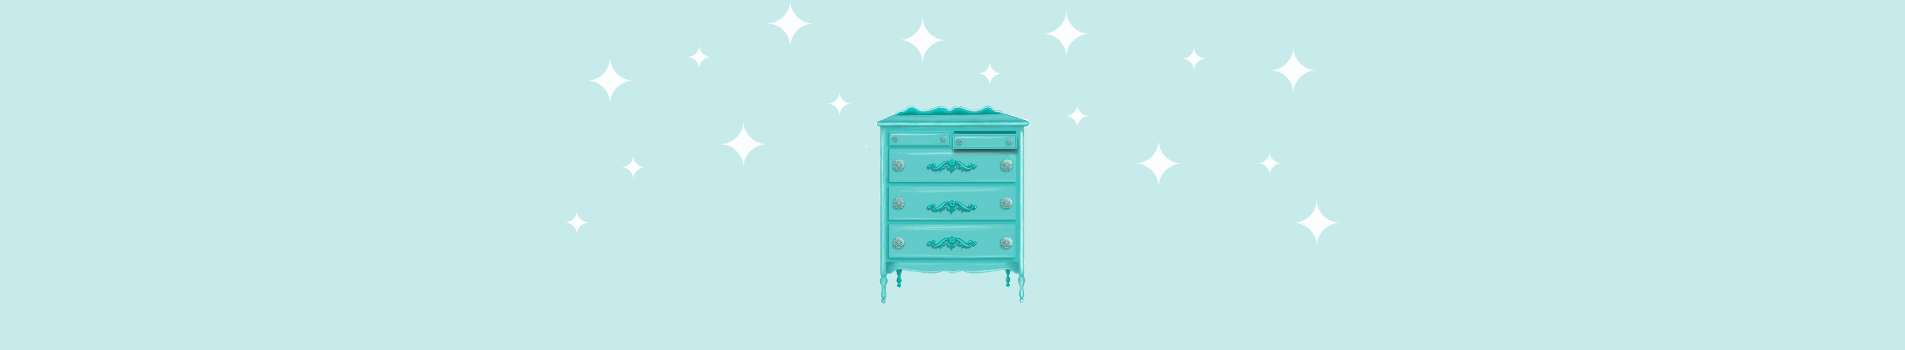 drawer illustration on aqua background